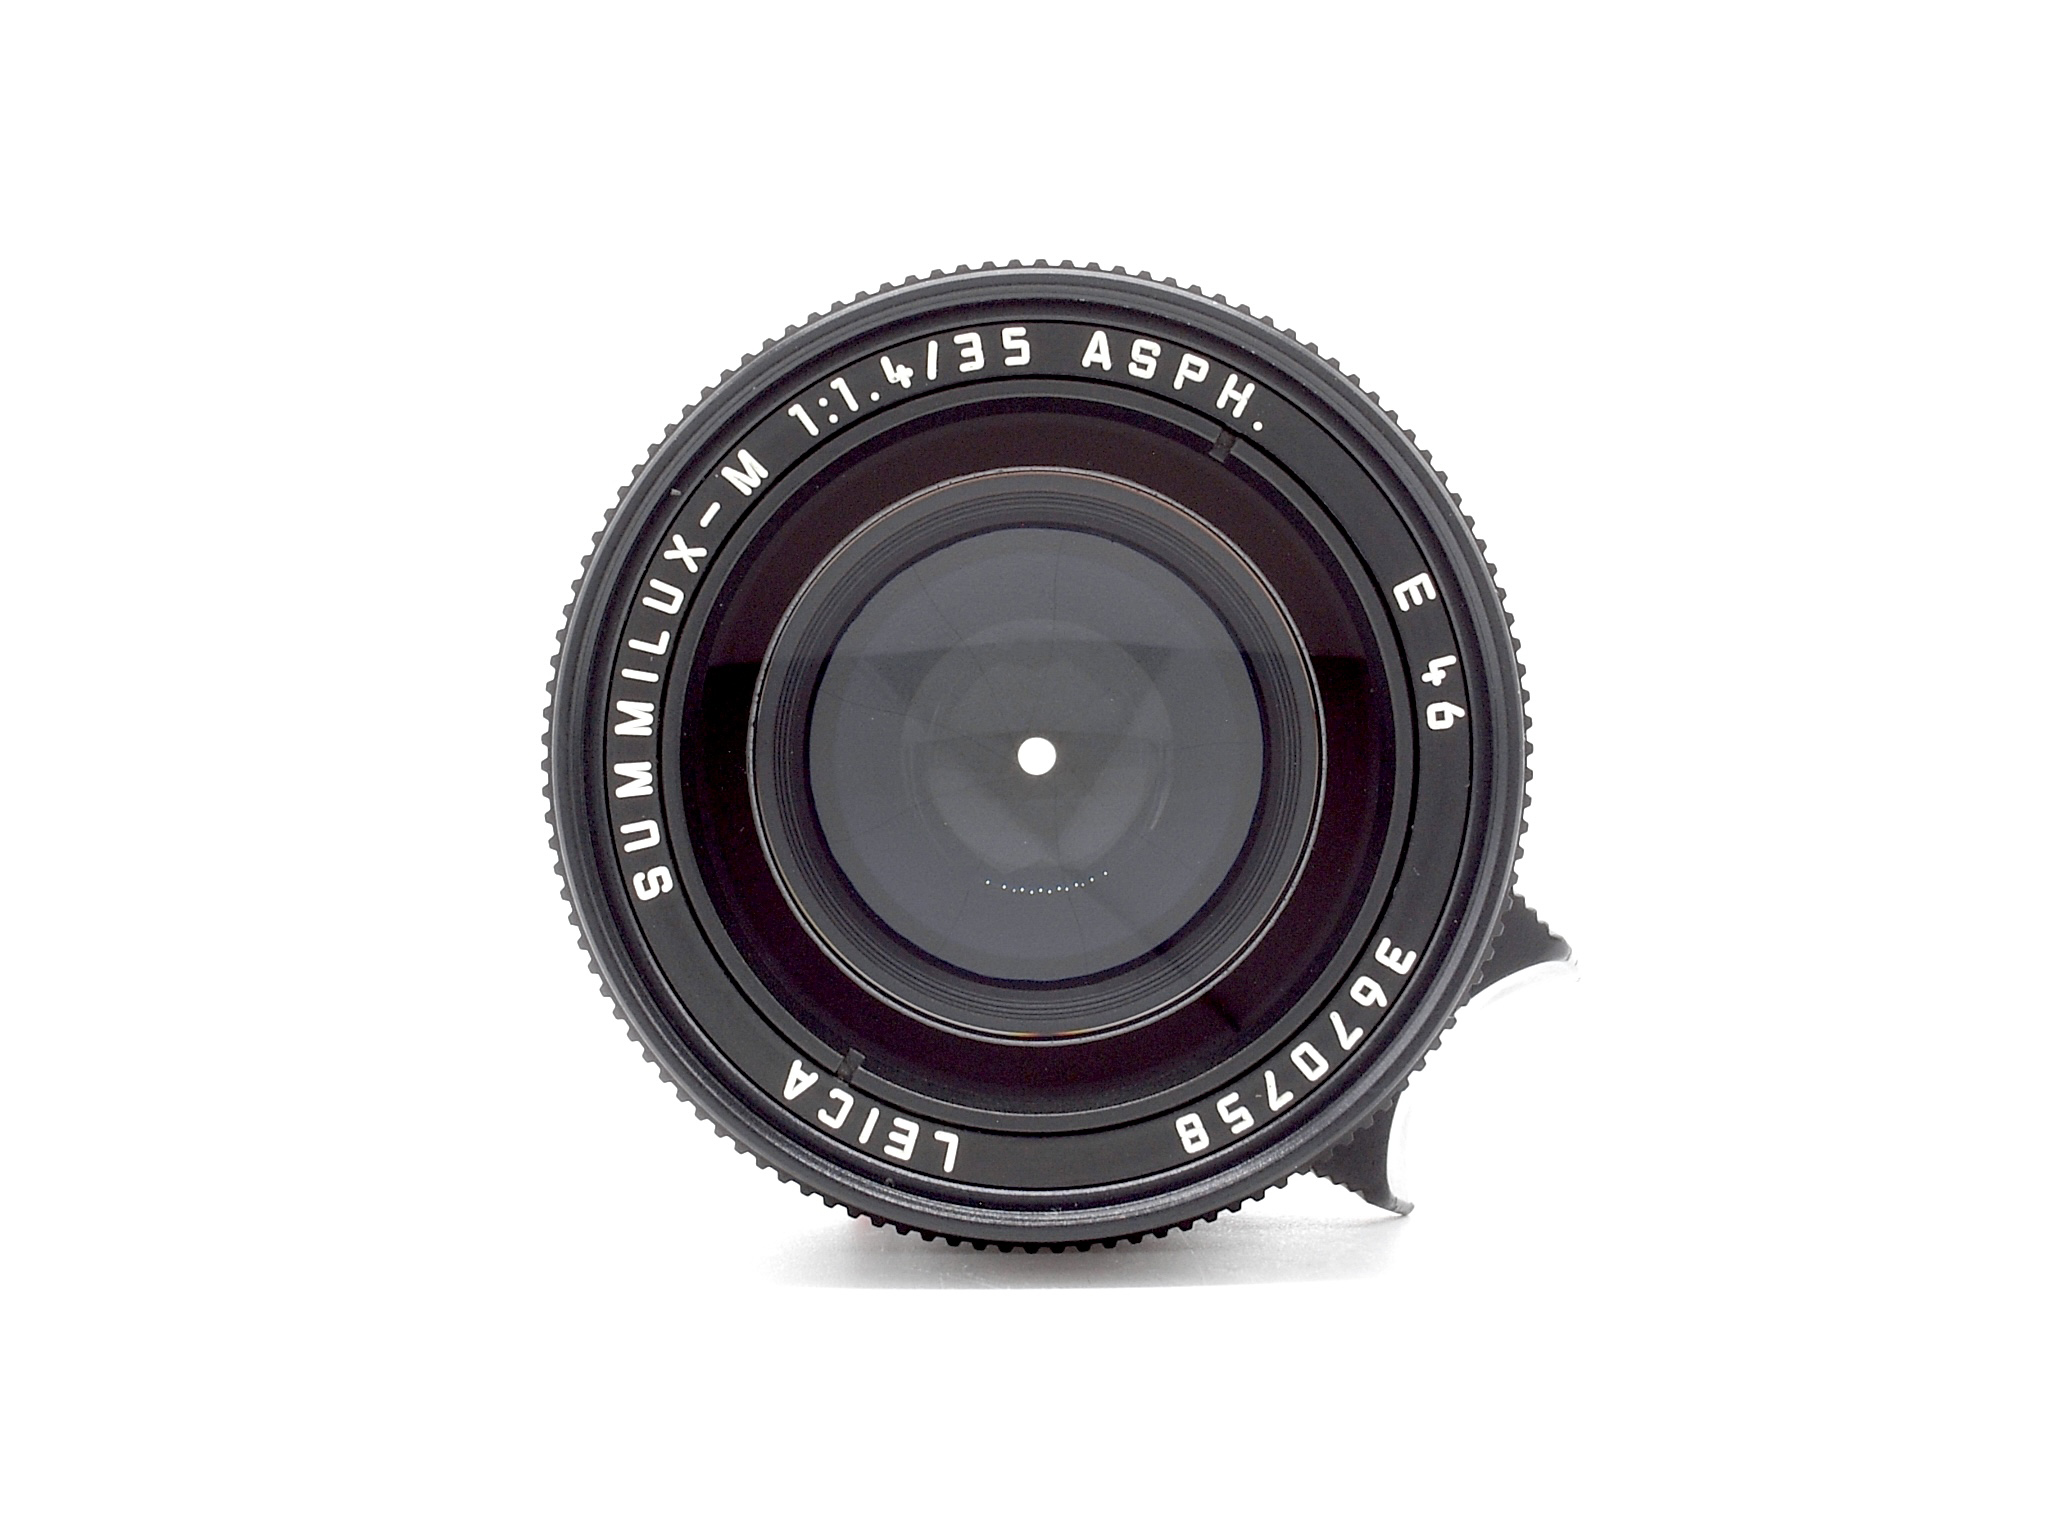 Leica Summilux-M 1,4/35mm ASPH. 6Bit